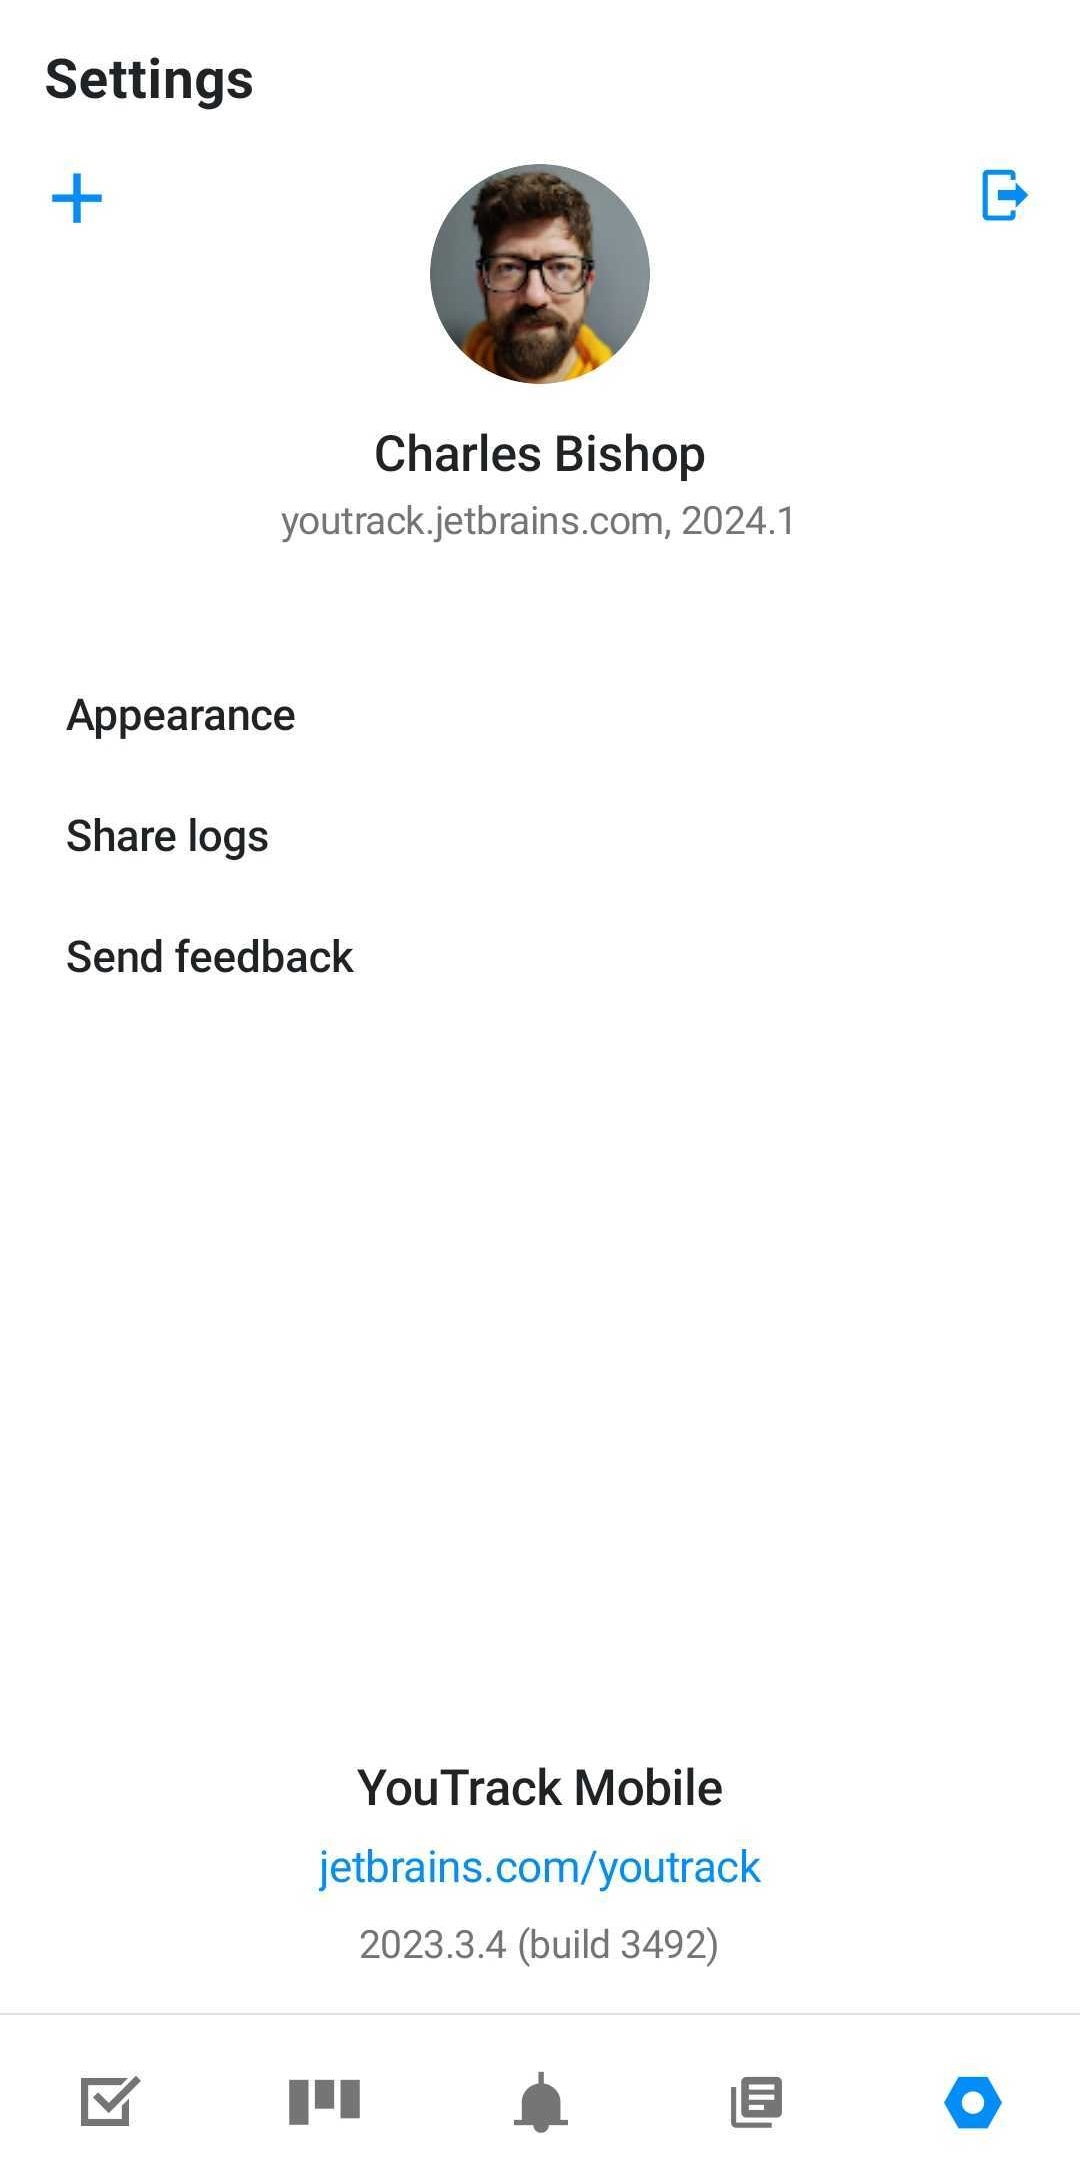 Settings screen in the mobile app.